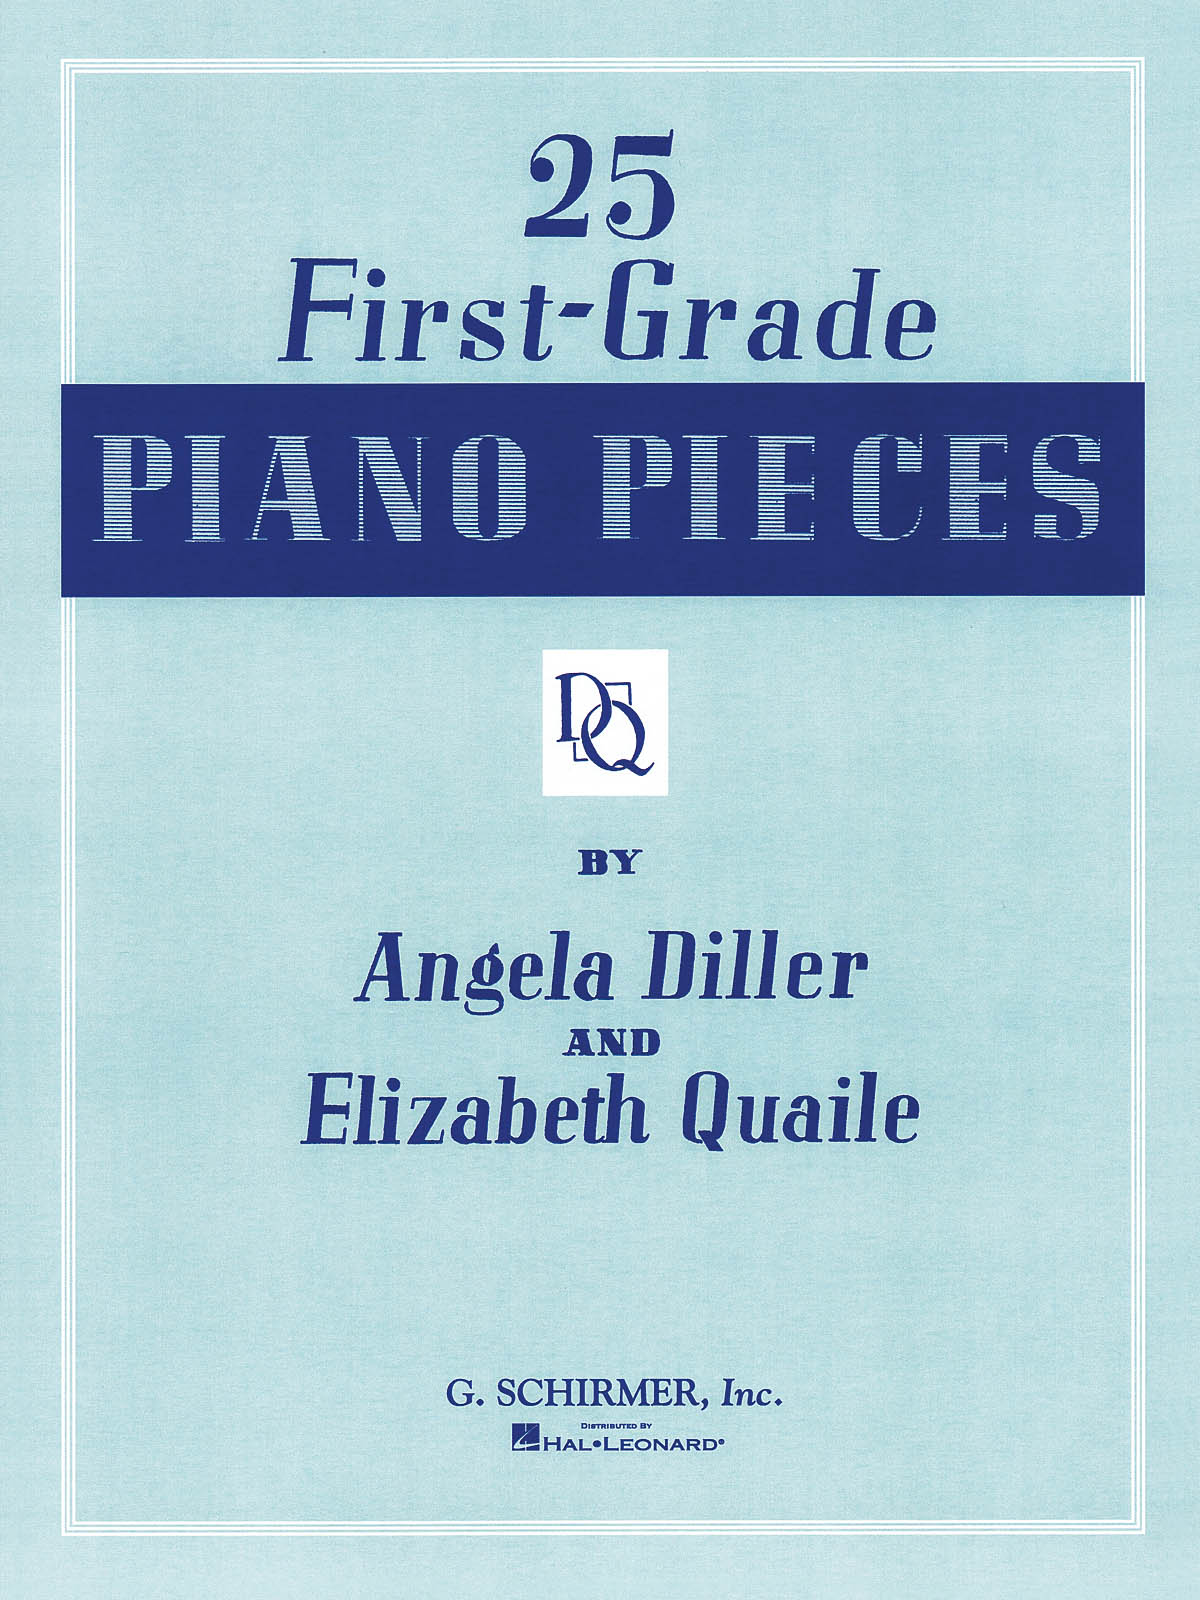 Angela Diller/Elizabeth Quaile: 25 First-Grade Piano Pieces